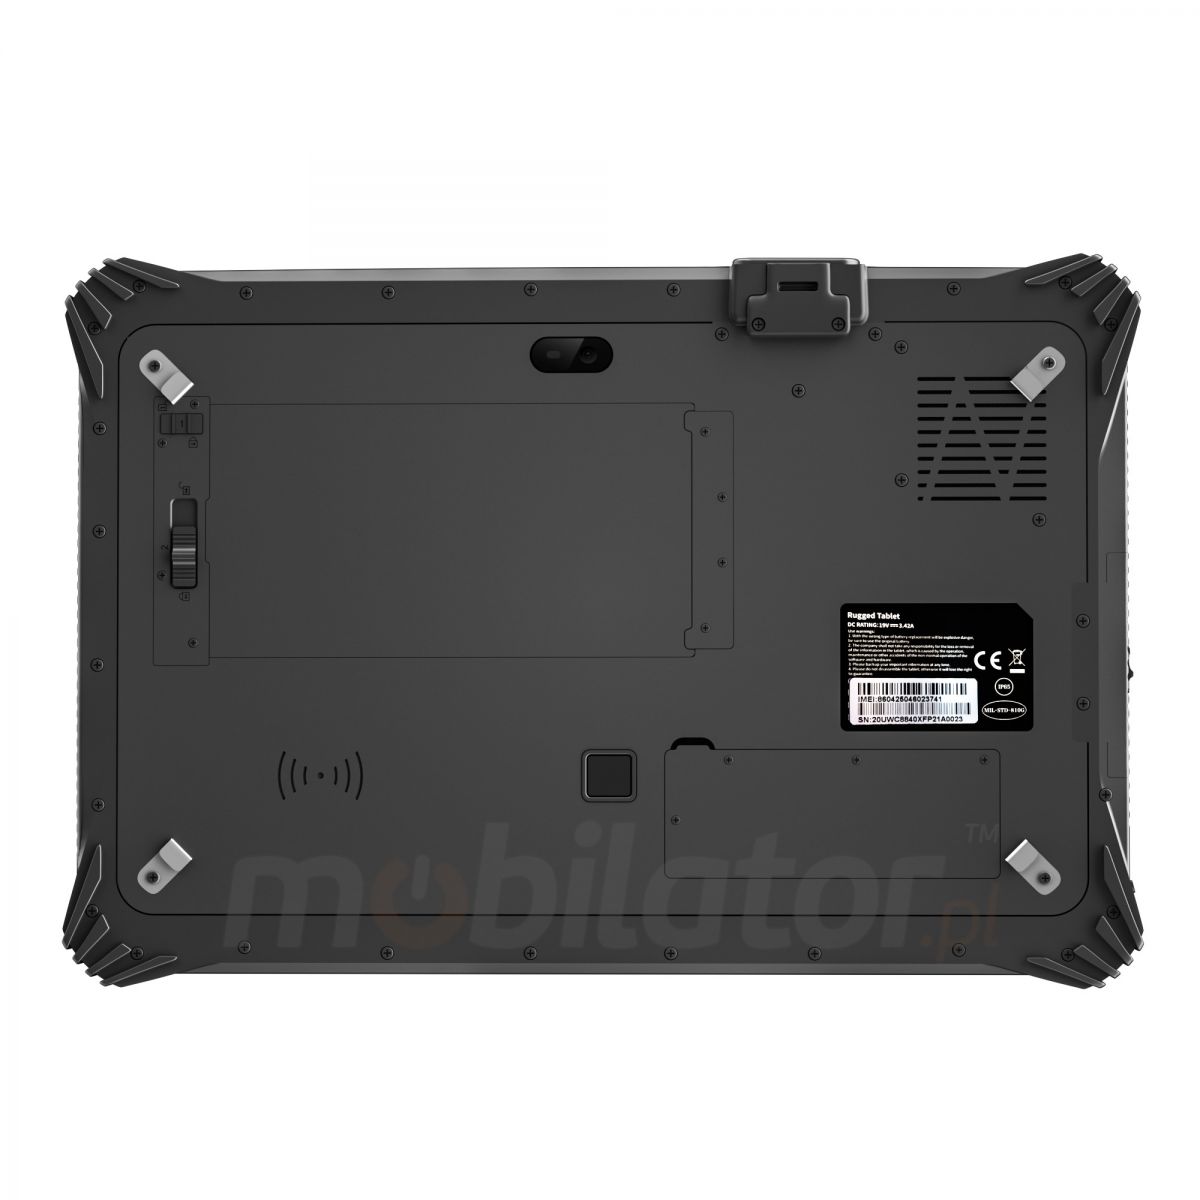 Waterproof 12.2 inch tablet (IP65 + MIL-STD-810G) with NFC, 1D MOTO barcode scanner, 8GB RAM, 128GB ROM disk, Bluetooth 4.2 - Emdoor I20U v.14